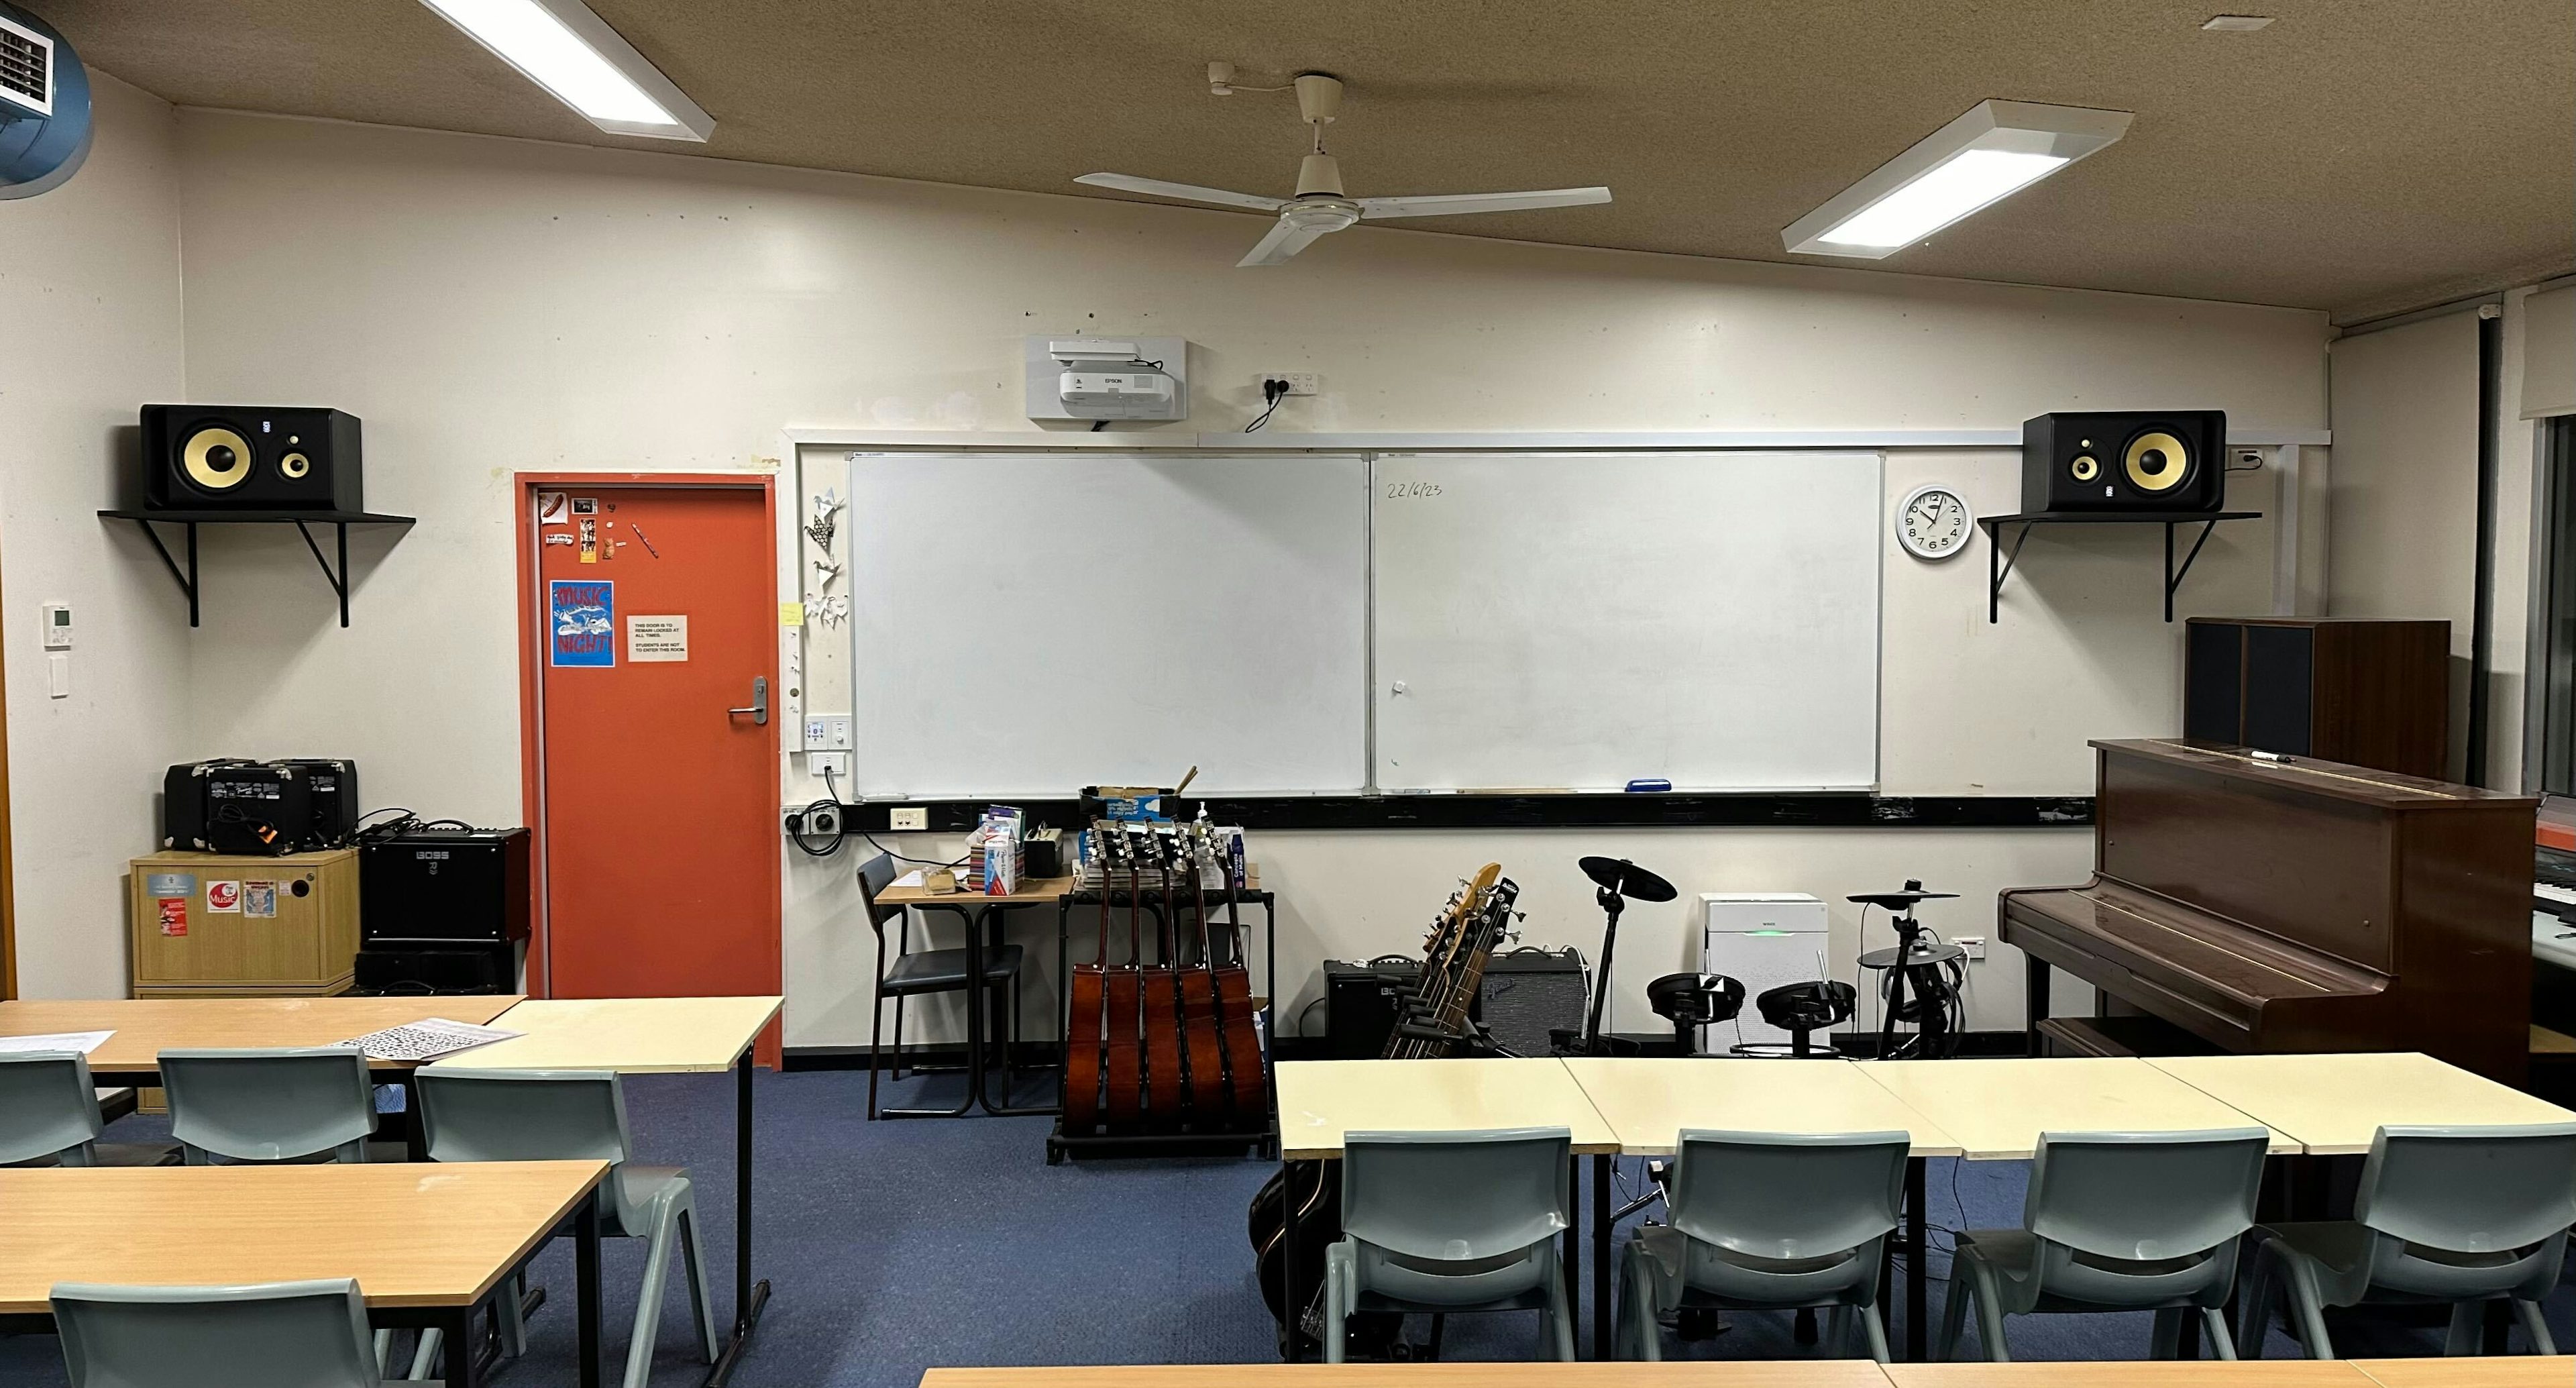 School Music Room Renovation